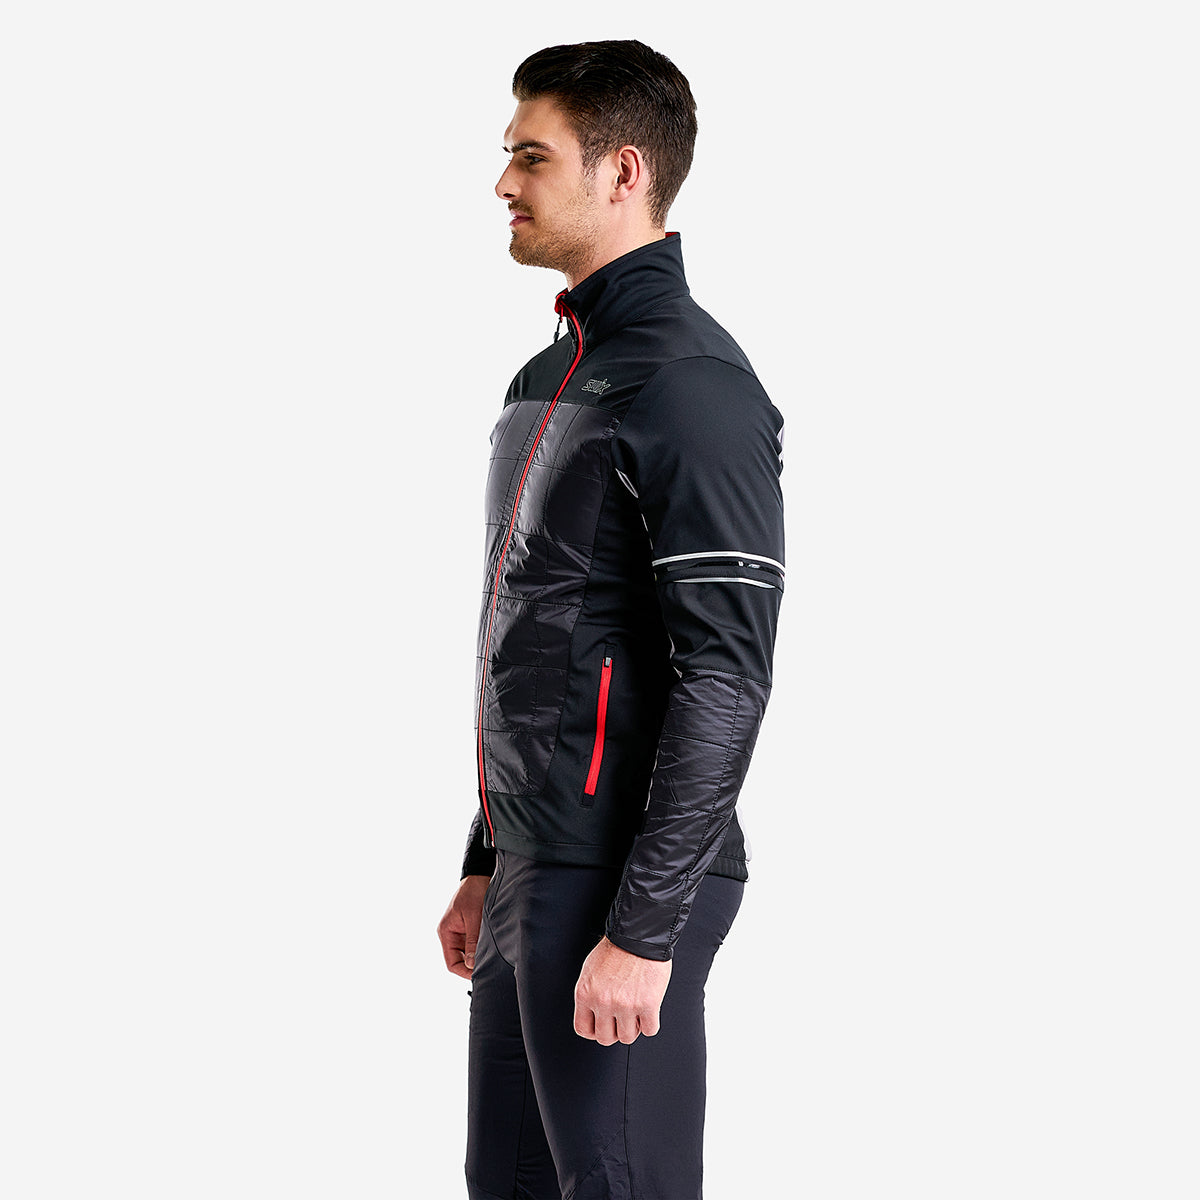 Navado - Men's Hybrid Jacket